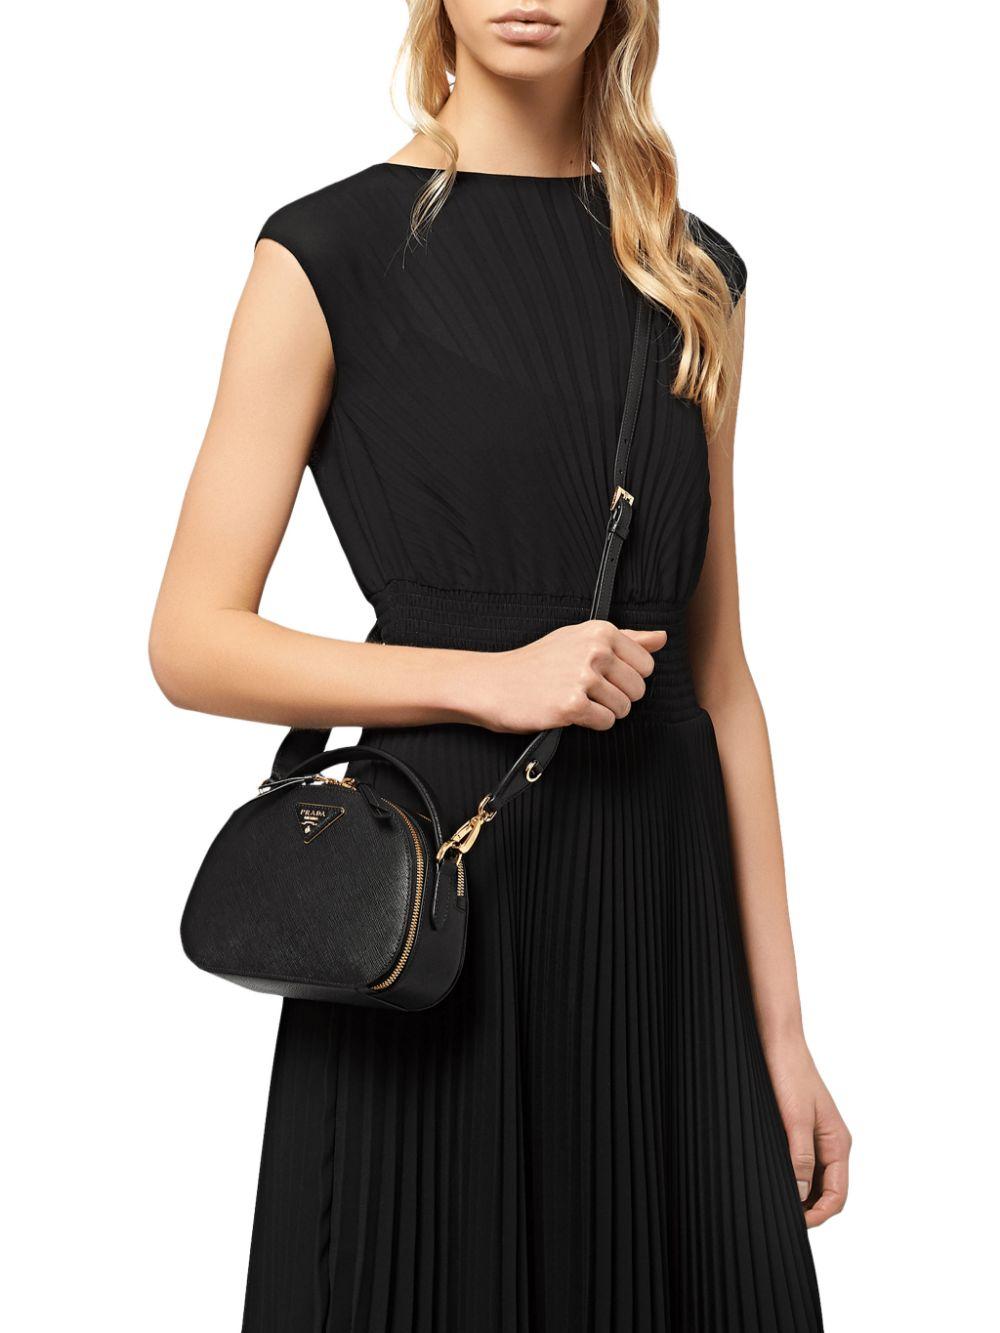 Prada Odette Leather Cross-body Bag in Black | Lyst